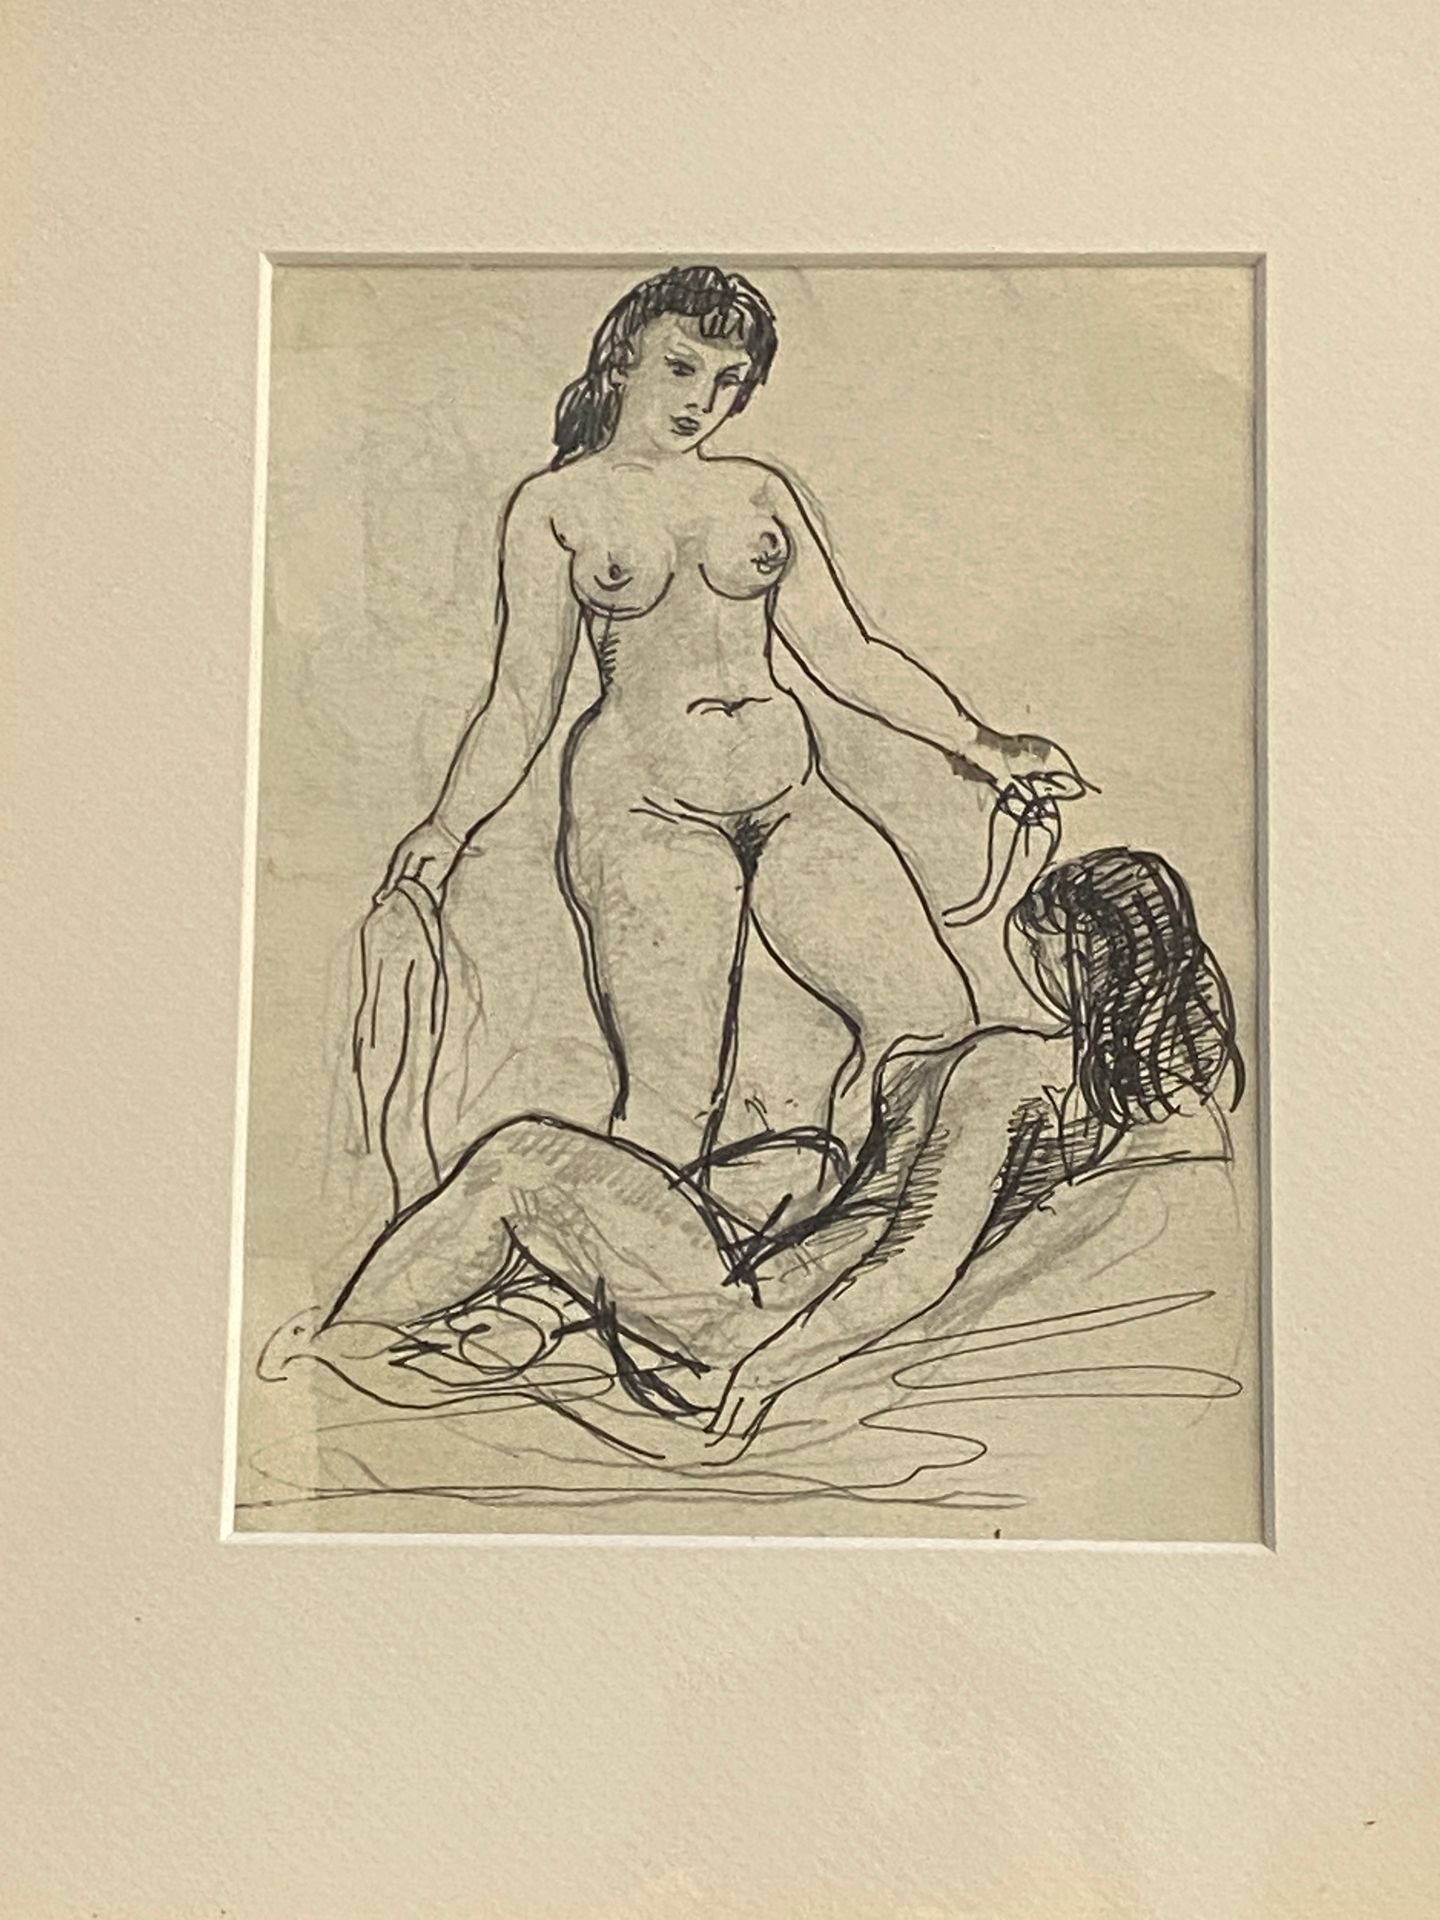 Null 雷内-安德烈(1906-1987)

人物研究

纸上水墨和铅笔

双面绘图。

尺寸：15 x 12厘米，正在观看